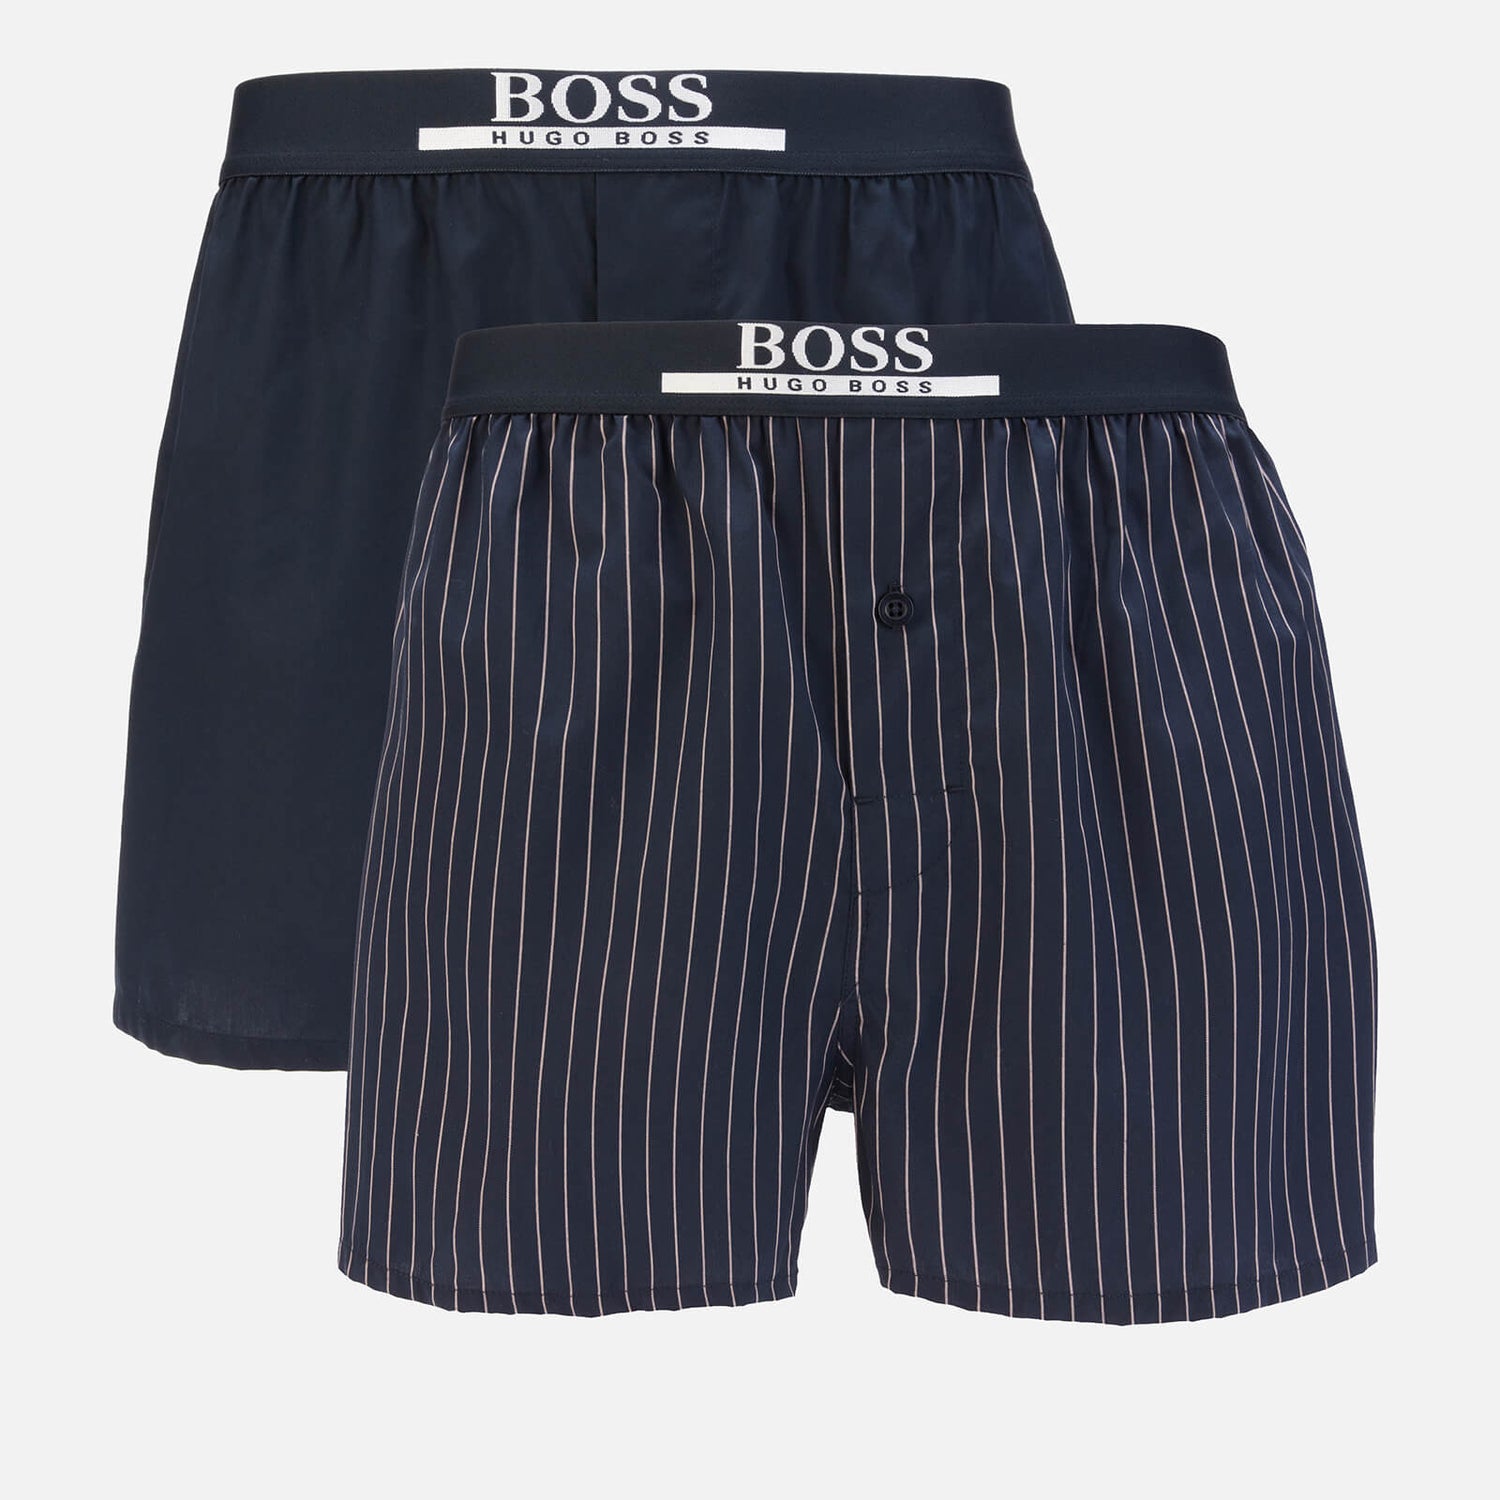 BOSS Bodywear Men's 2 Pack Woven Boxer Shorts - Blue/Pink